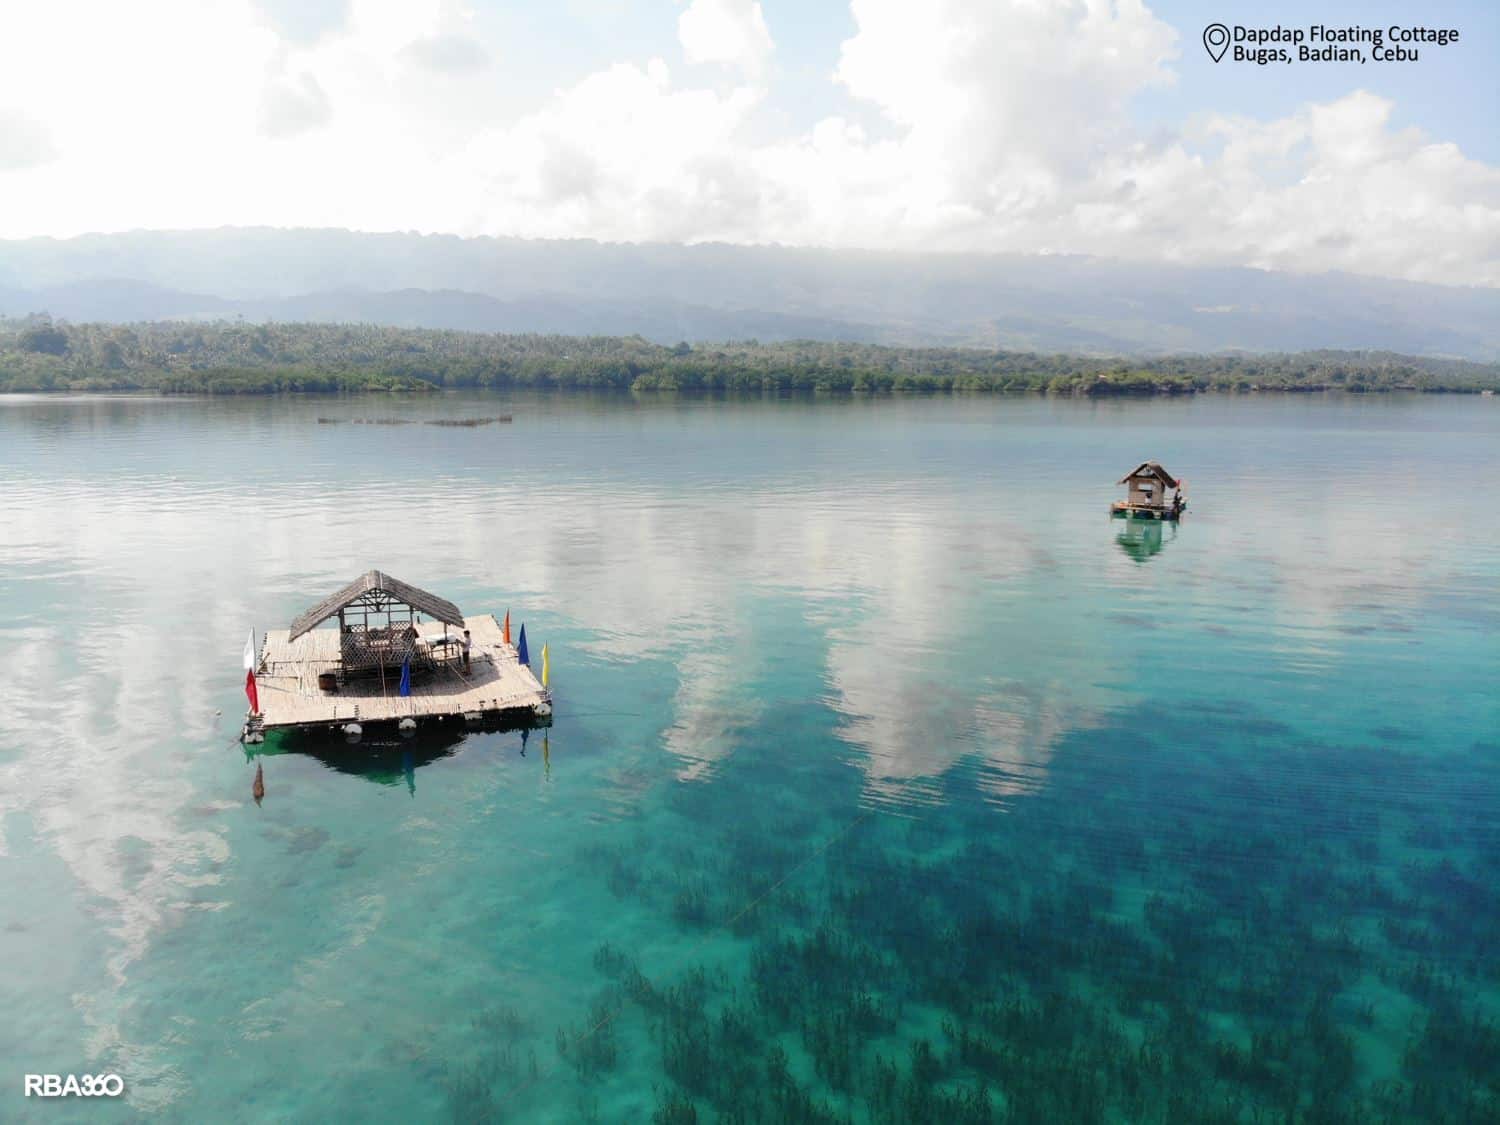 Dapdap's Floating Cottage Badian Cebu